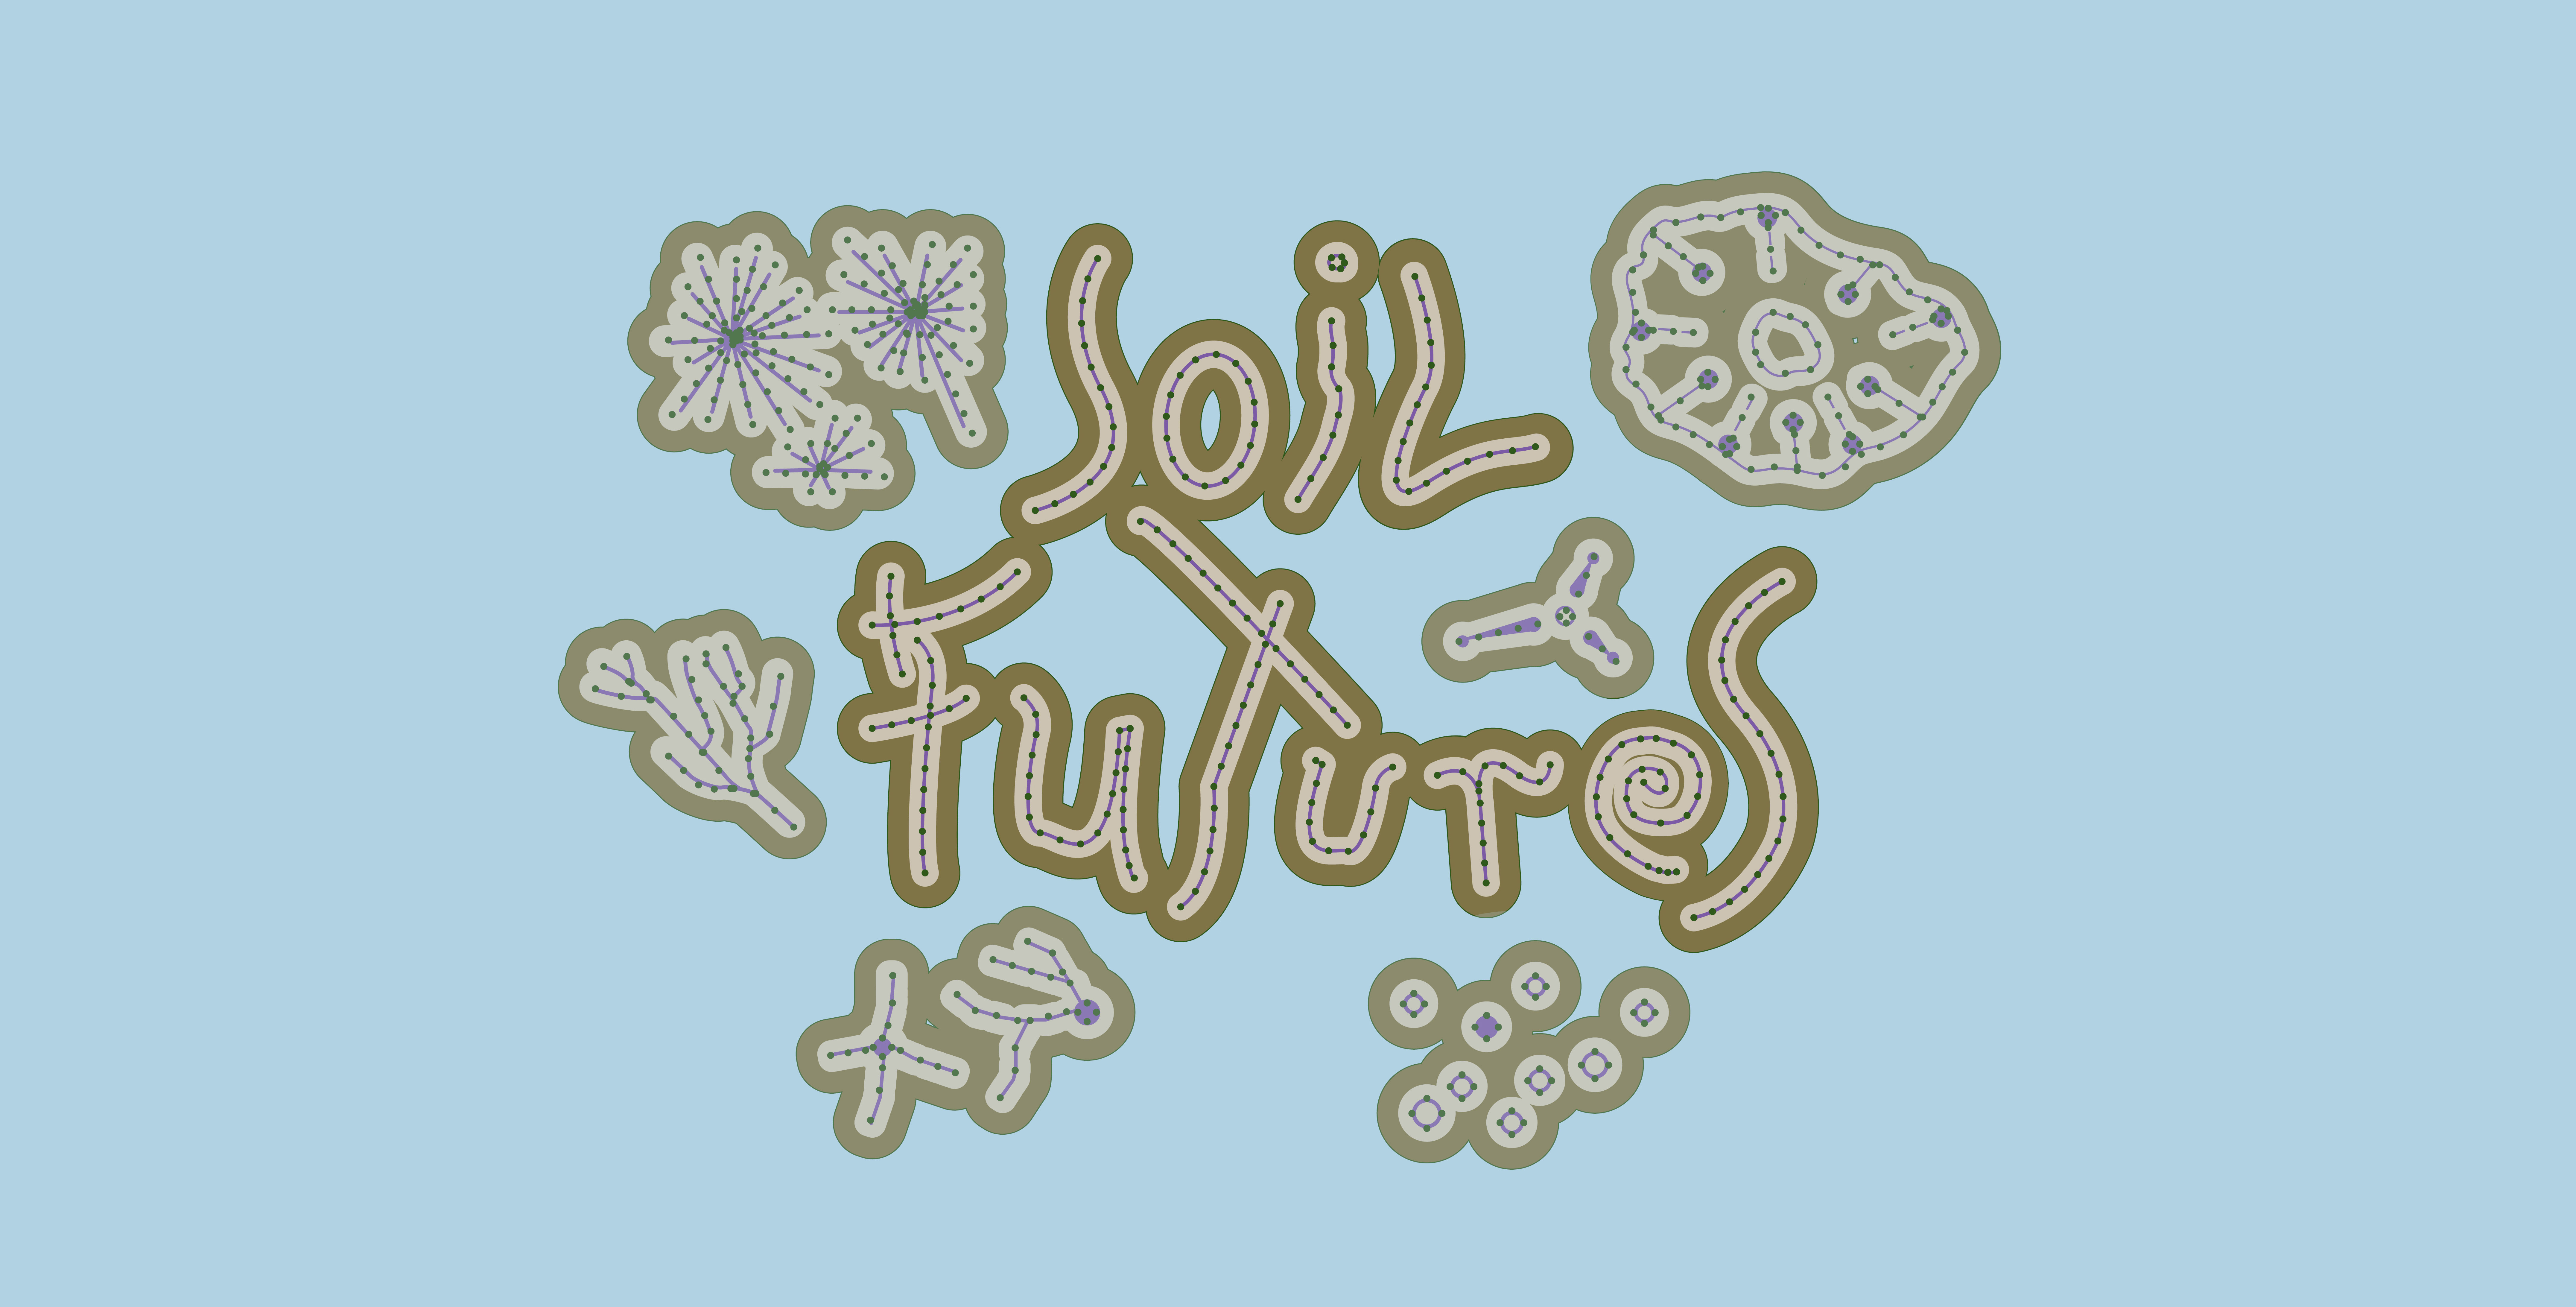 <a href="https://www.artscatalyst.org/soil-futures">فرصة للفنانين/ات :إقامة فنية ضمن مشروع Soil Futures   </a>